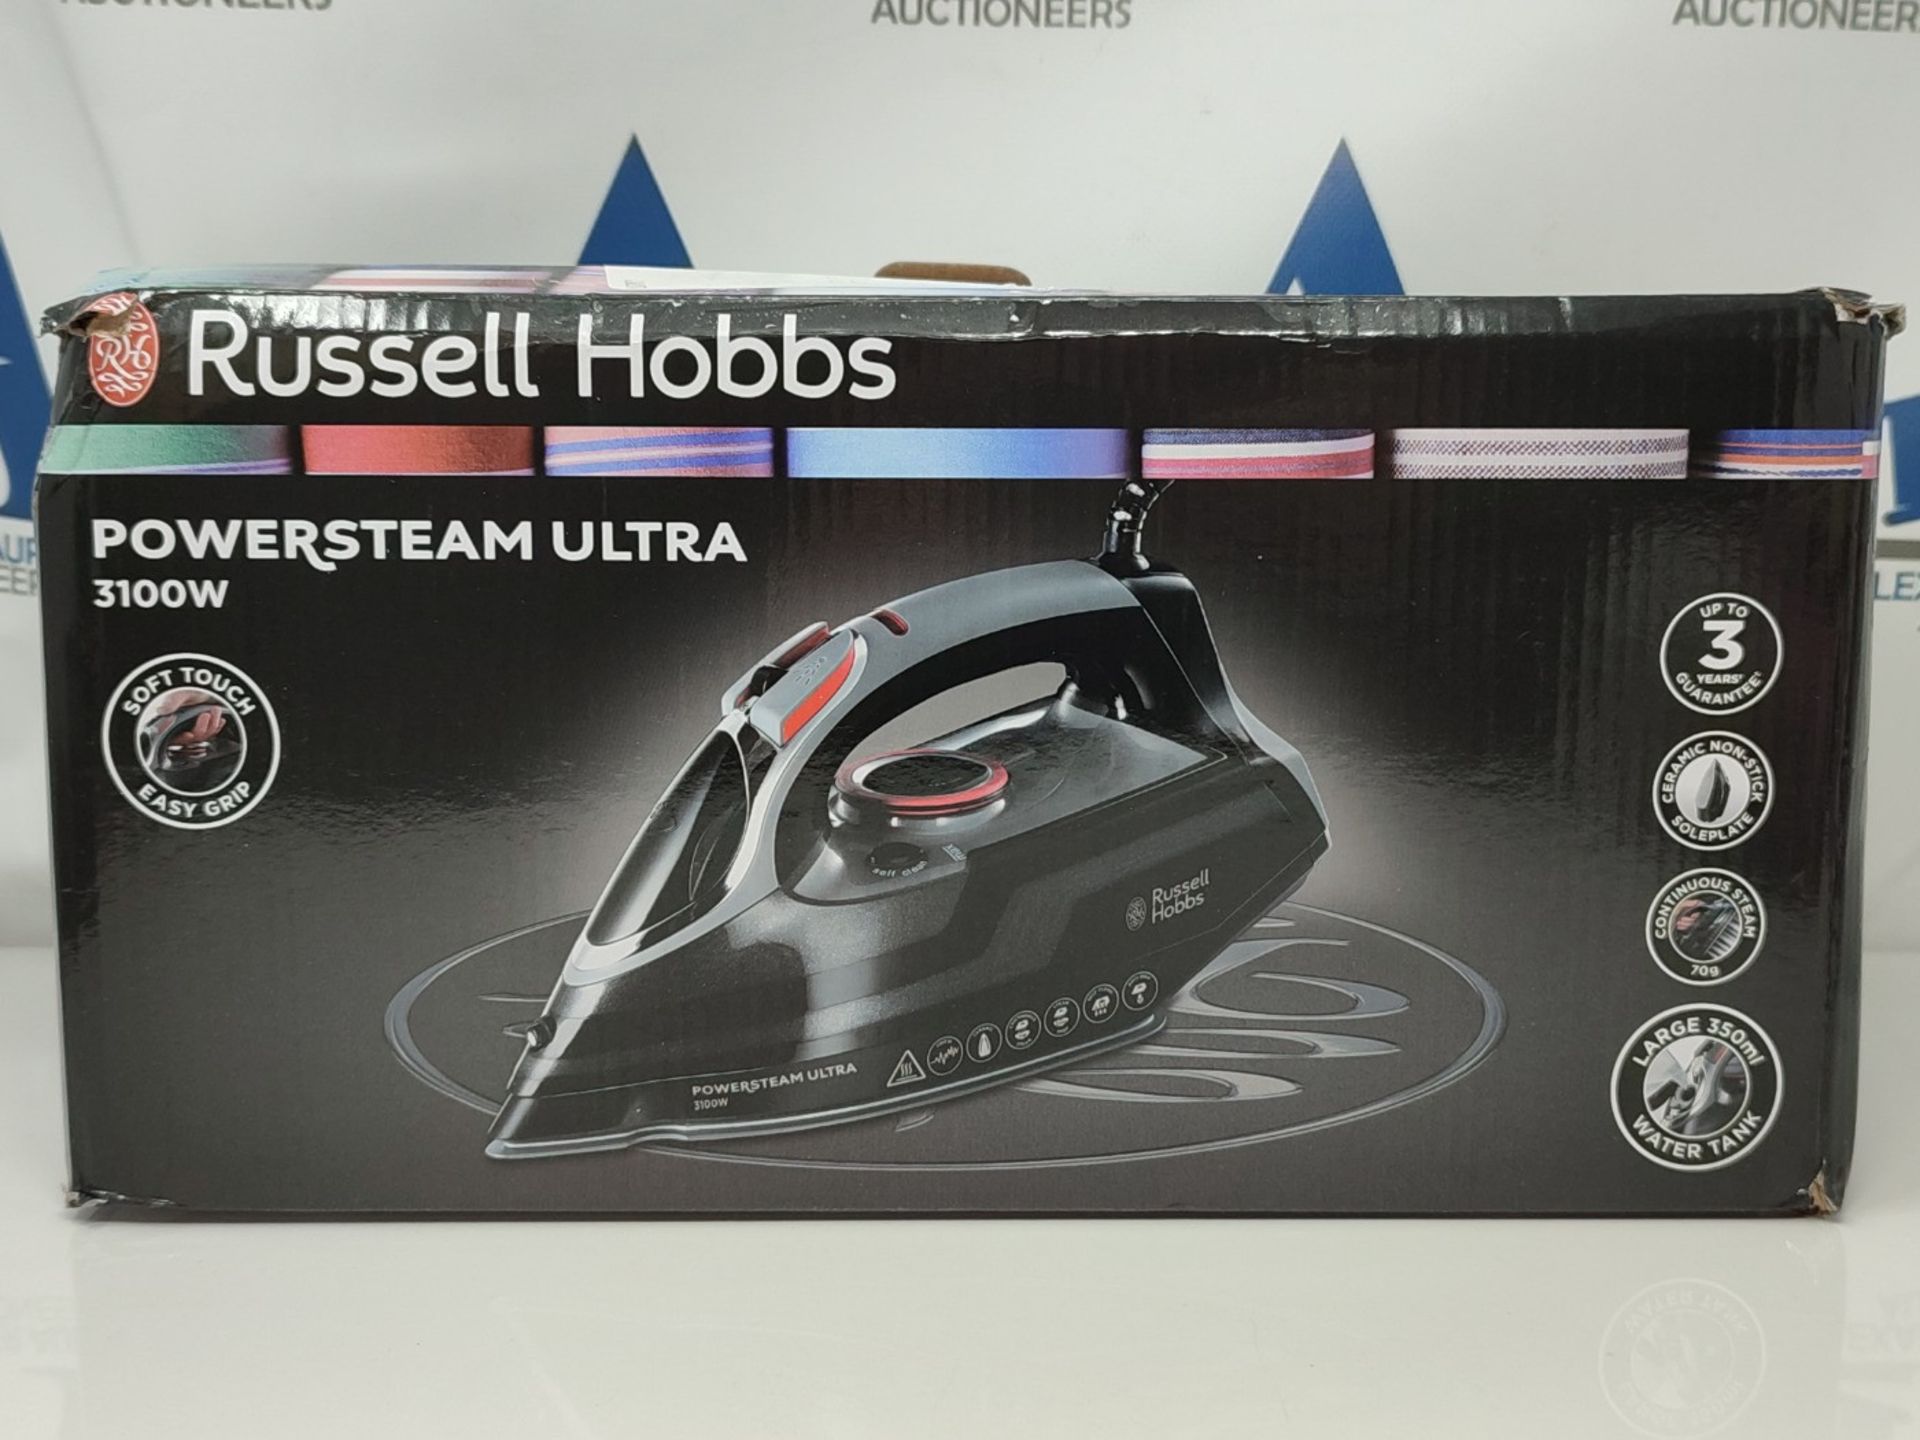 Russell Hobbs Powersteam Ultra 3100 W Vertical Steam Iron 20630 - Black & Grey (UK Plu - Image 2 of 3